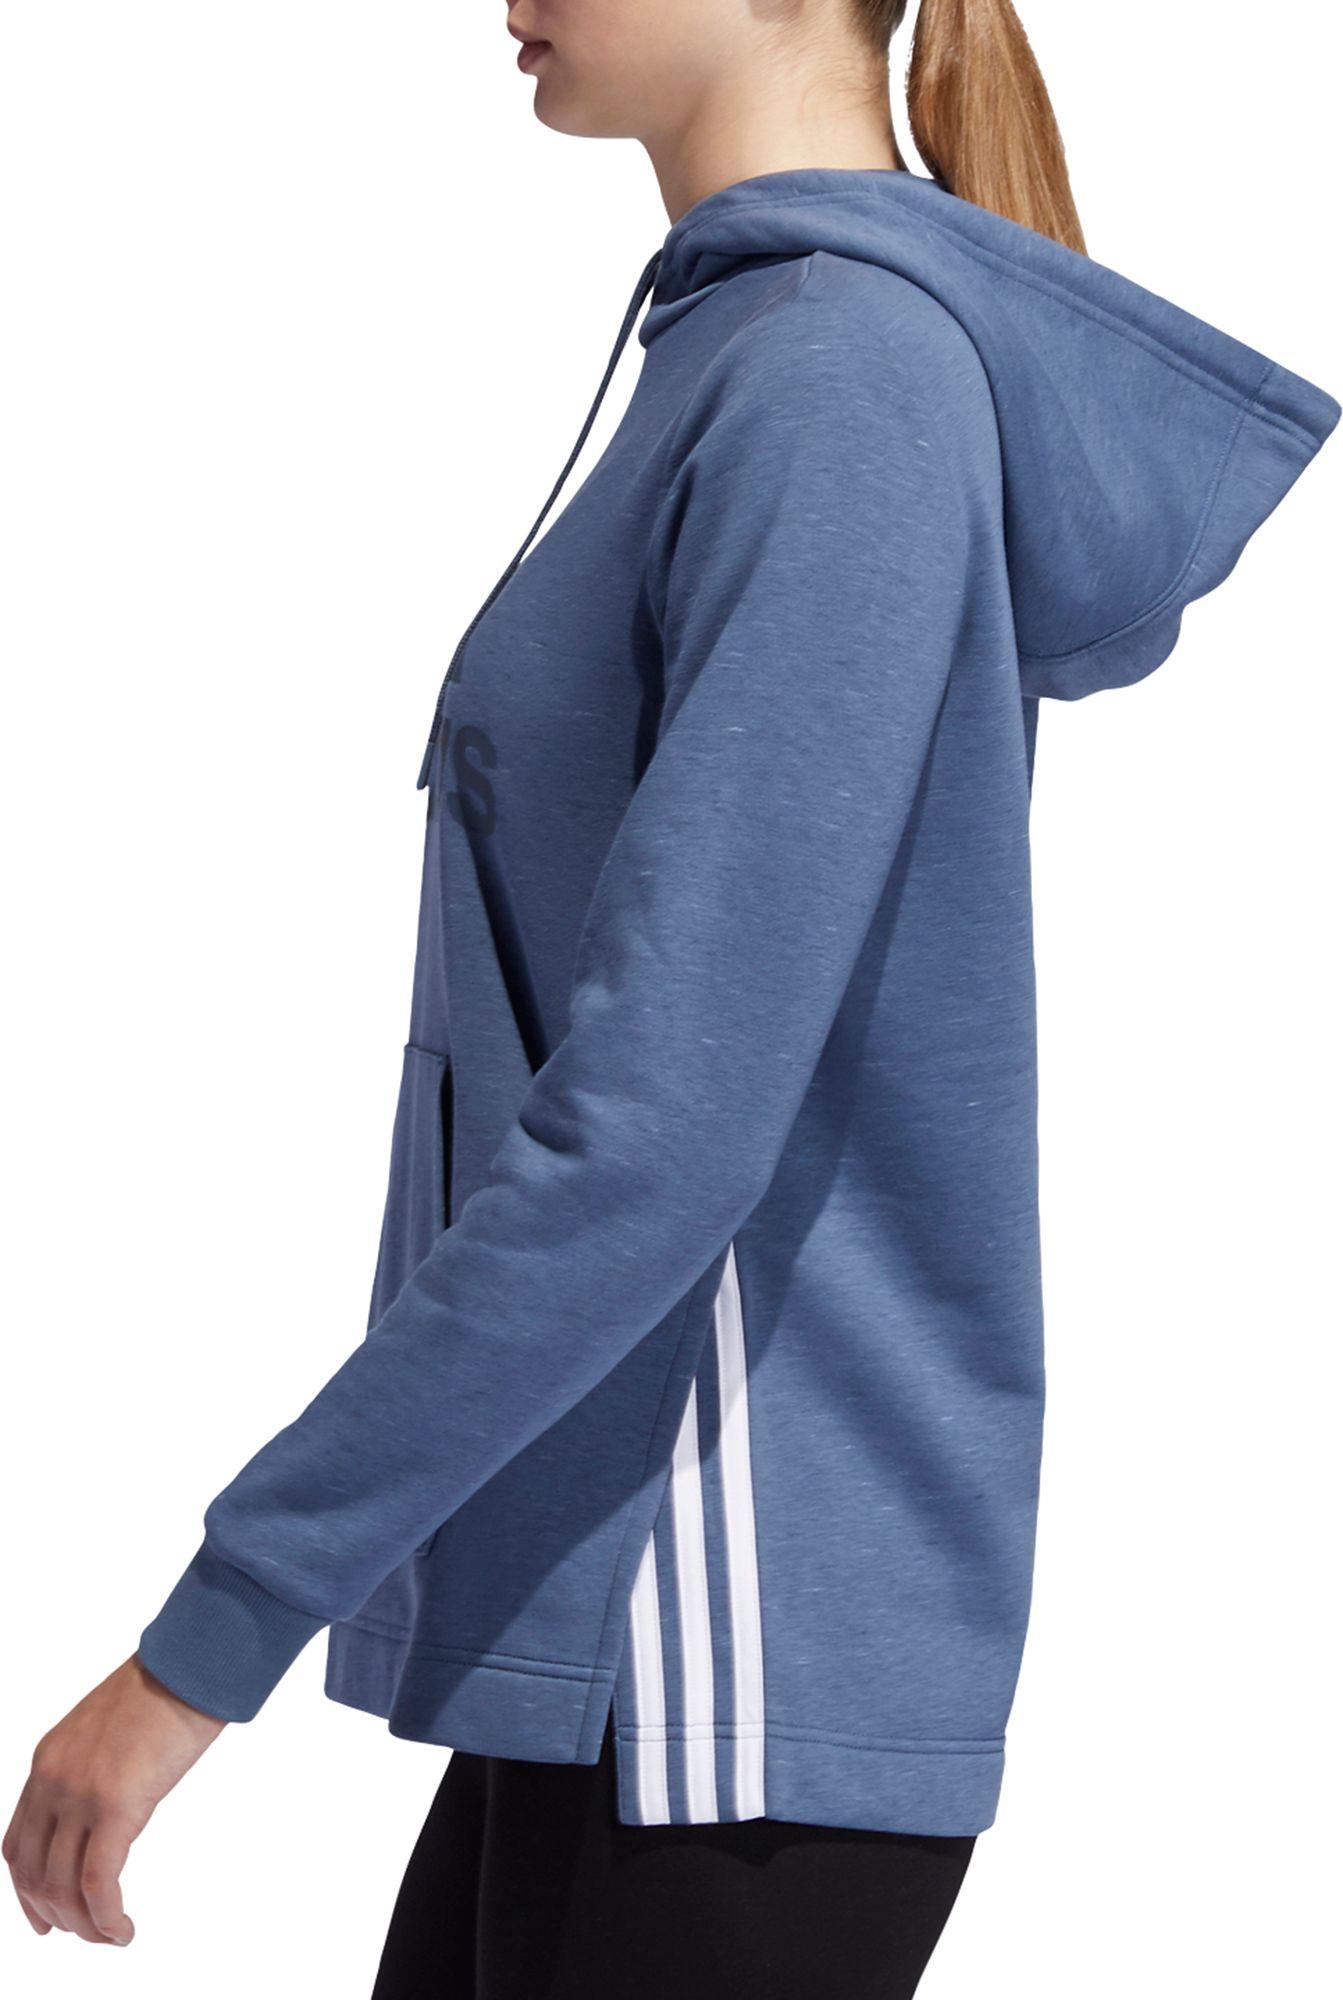 adidas women's post game fleece pullover